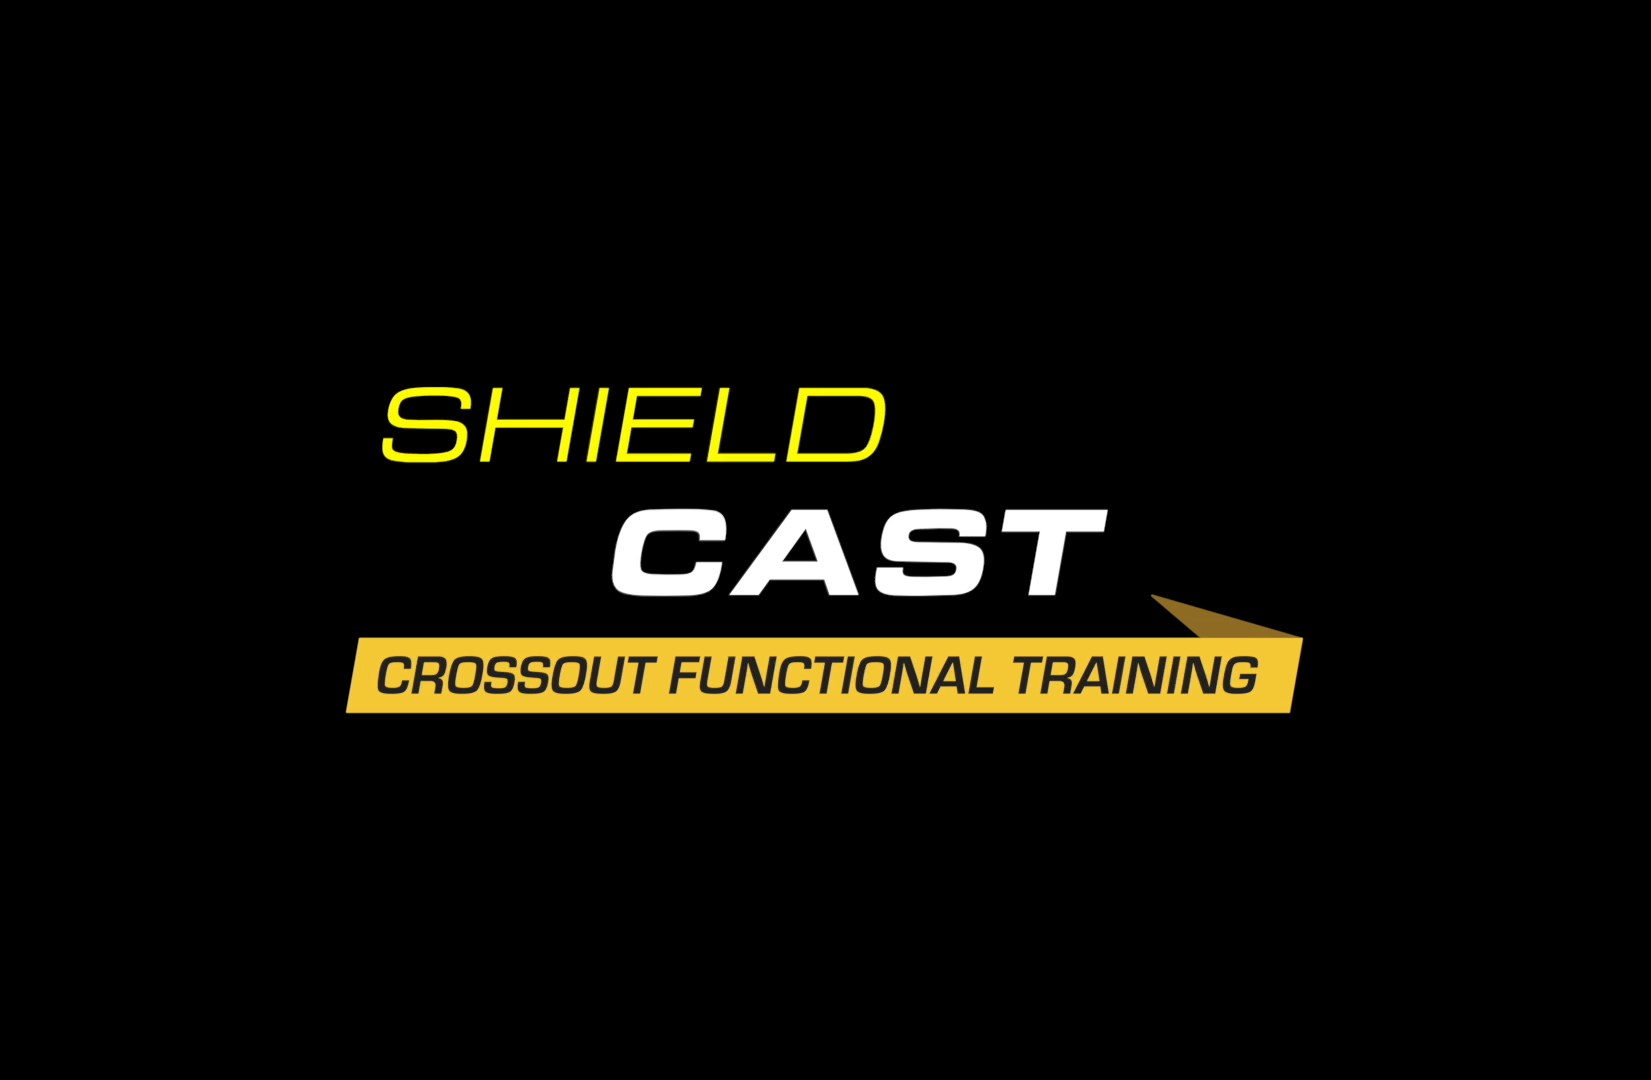 Shield Cast Crossout Functional Training